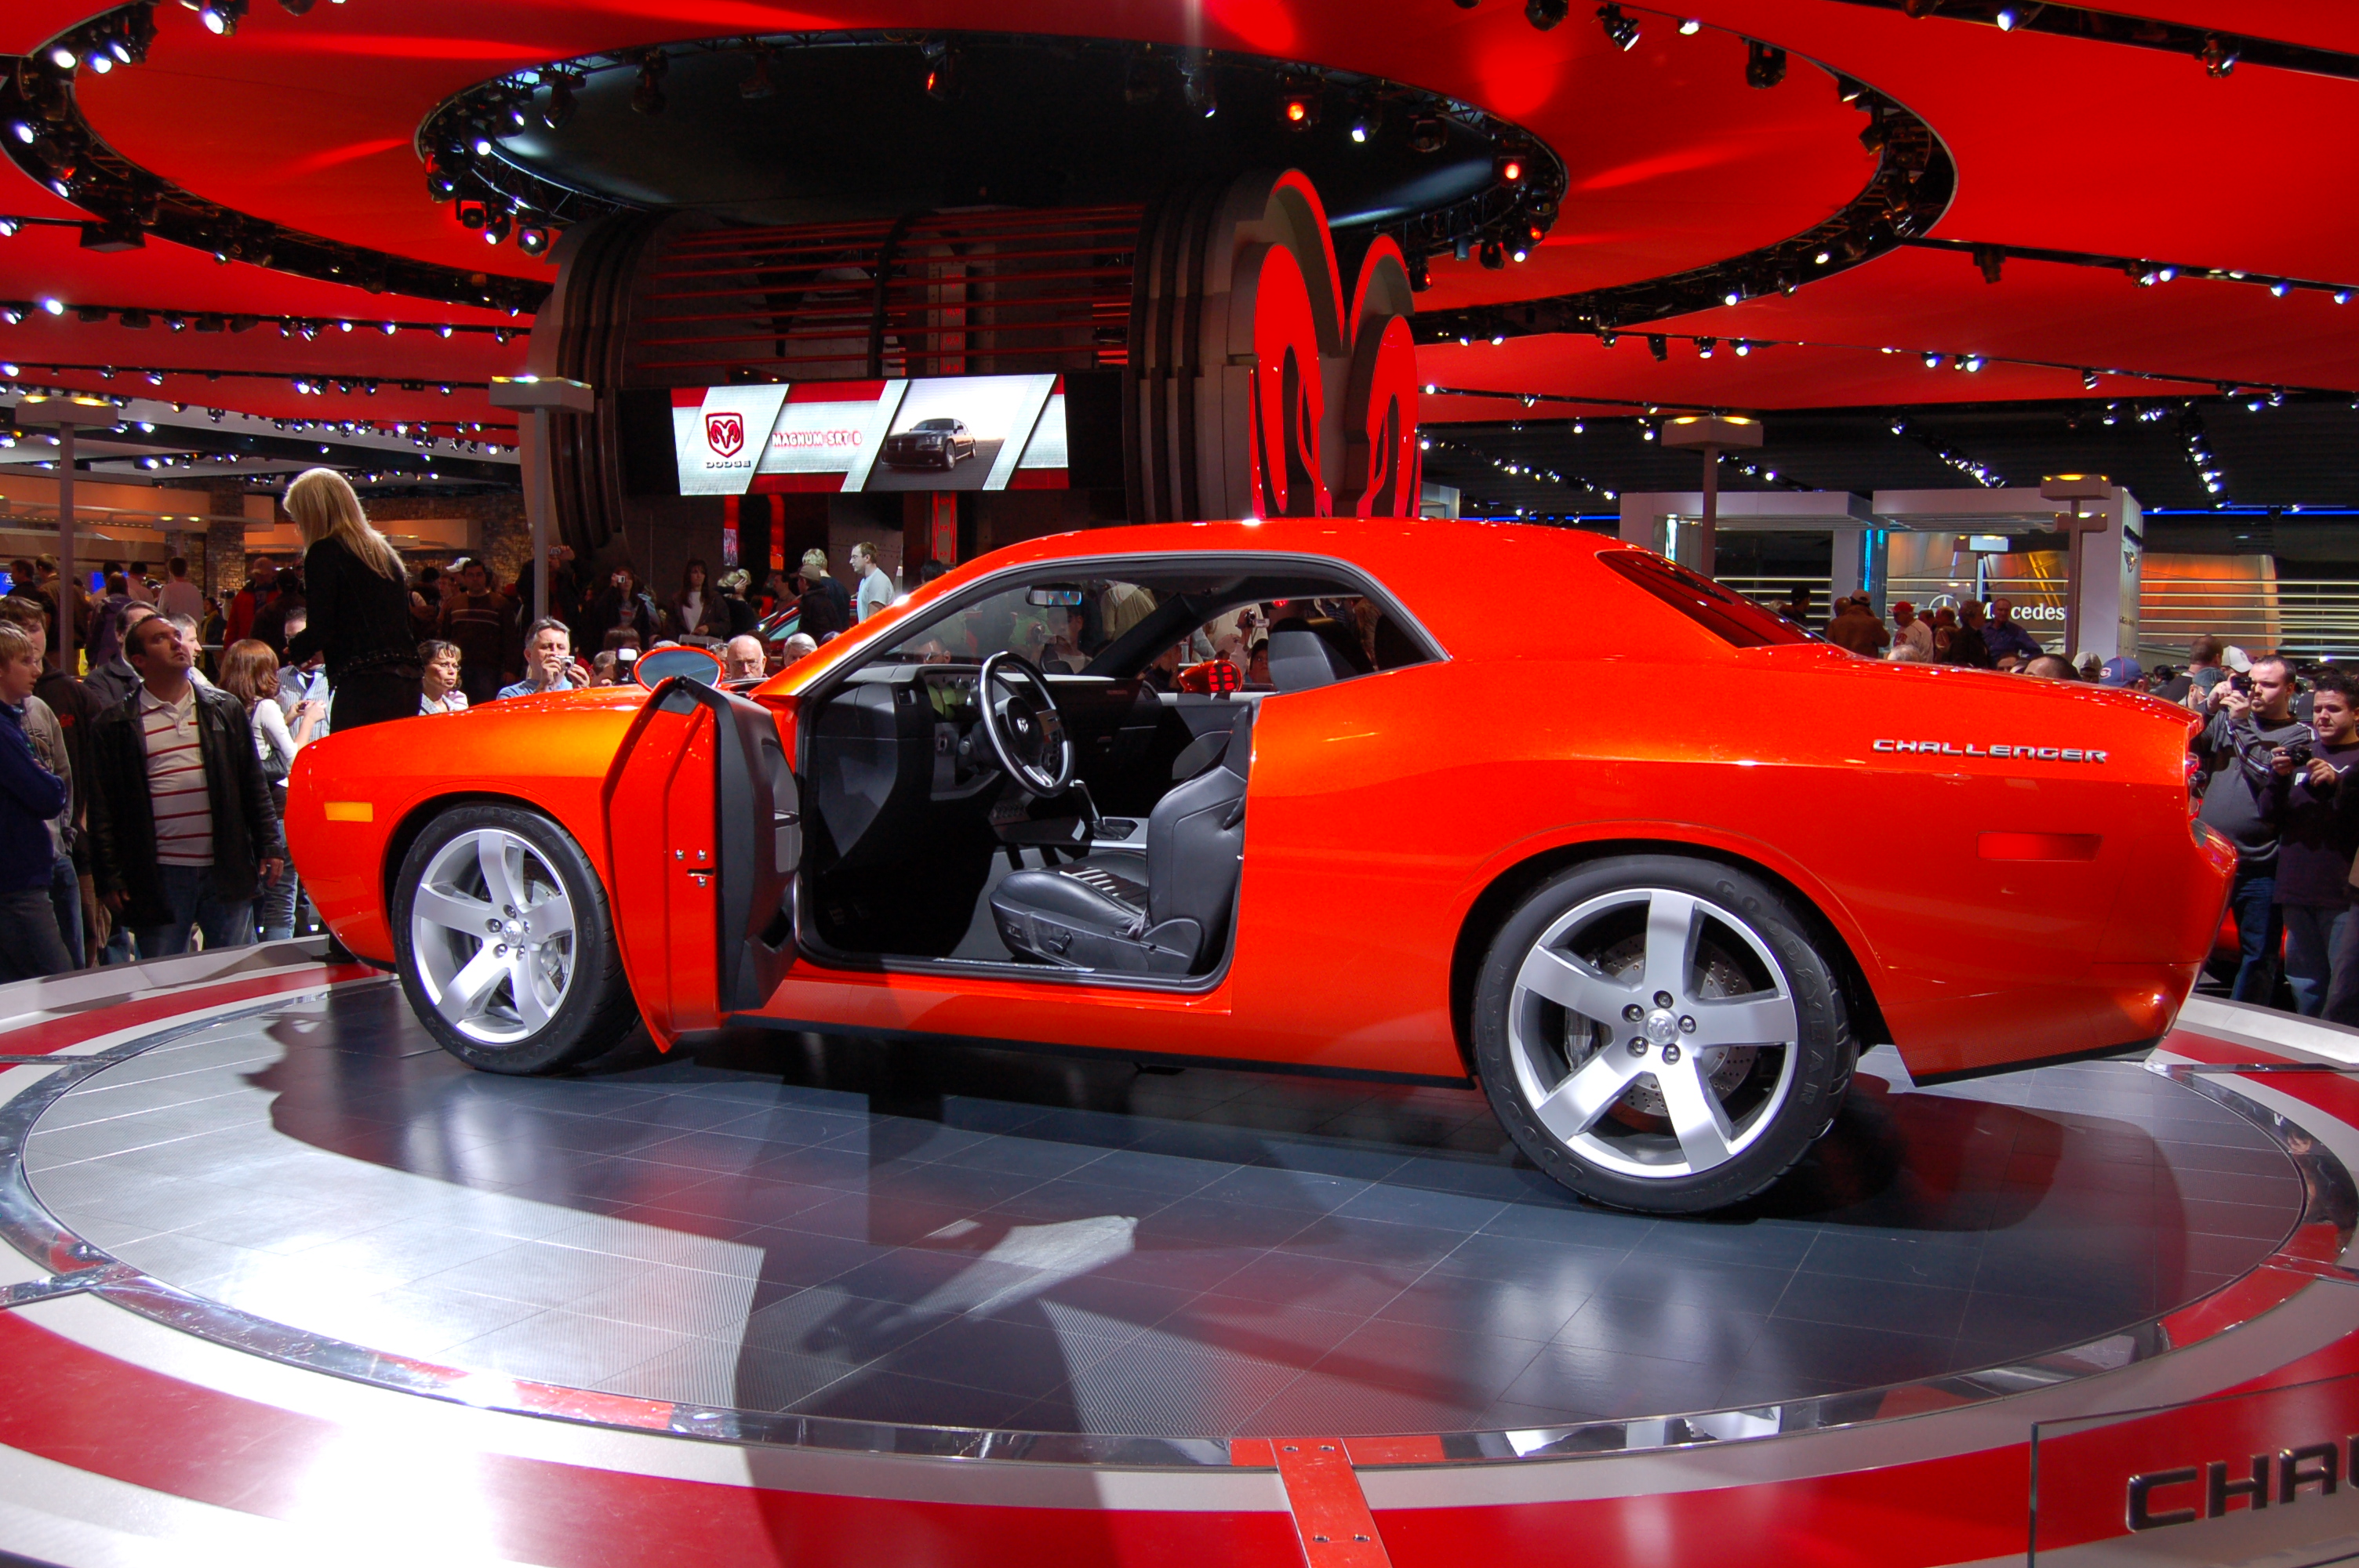 Dodge Challenger concept car | Flickr - Photo Sharing!